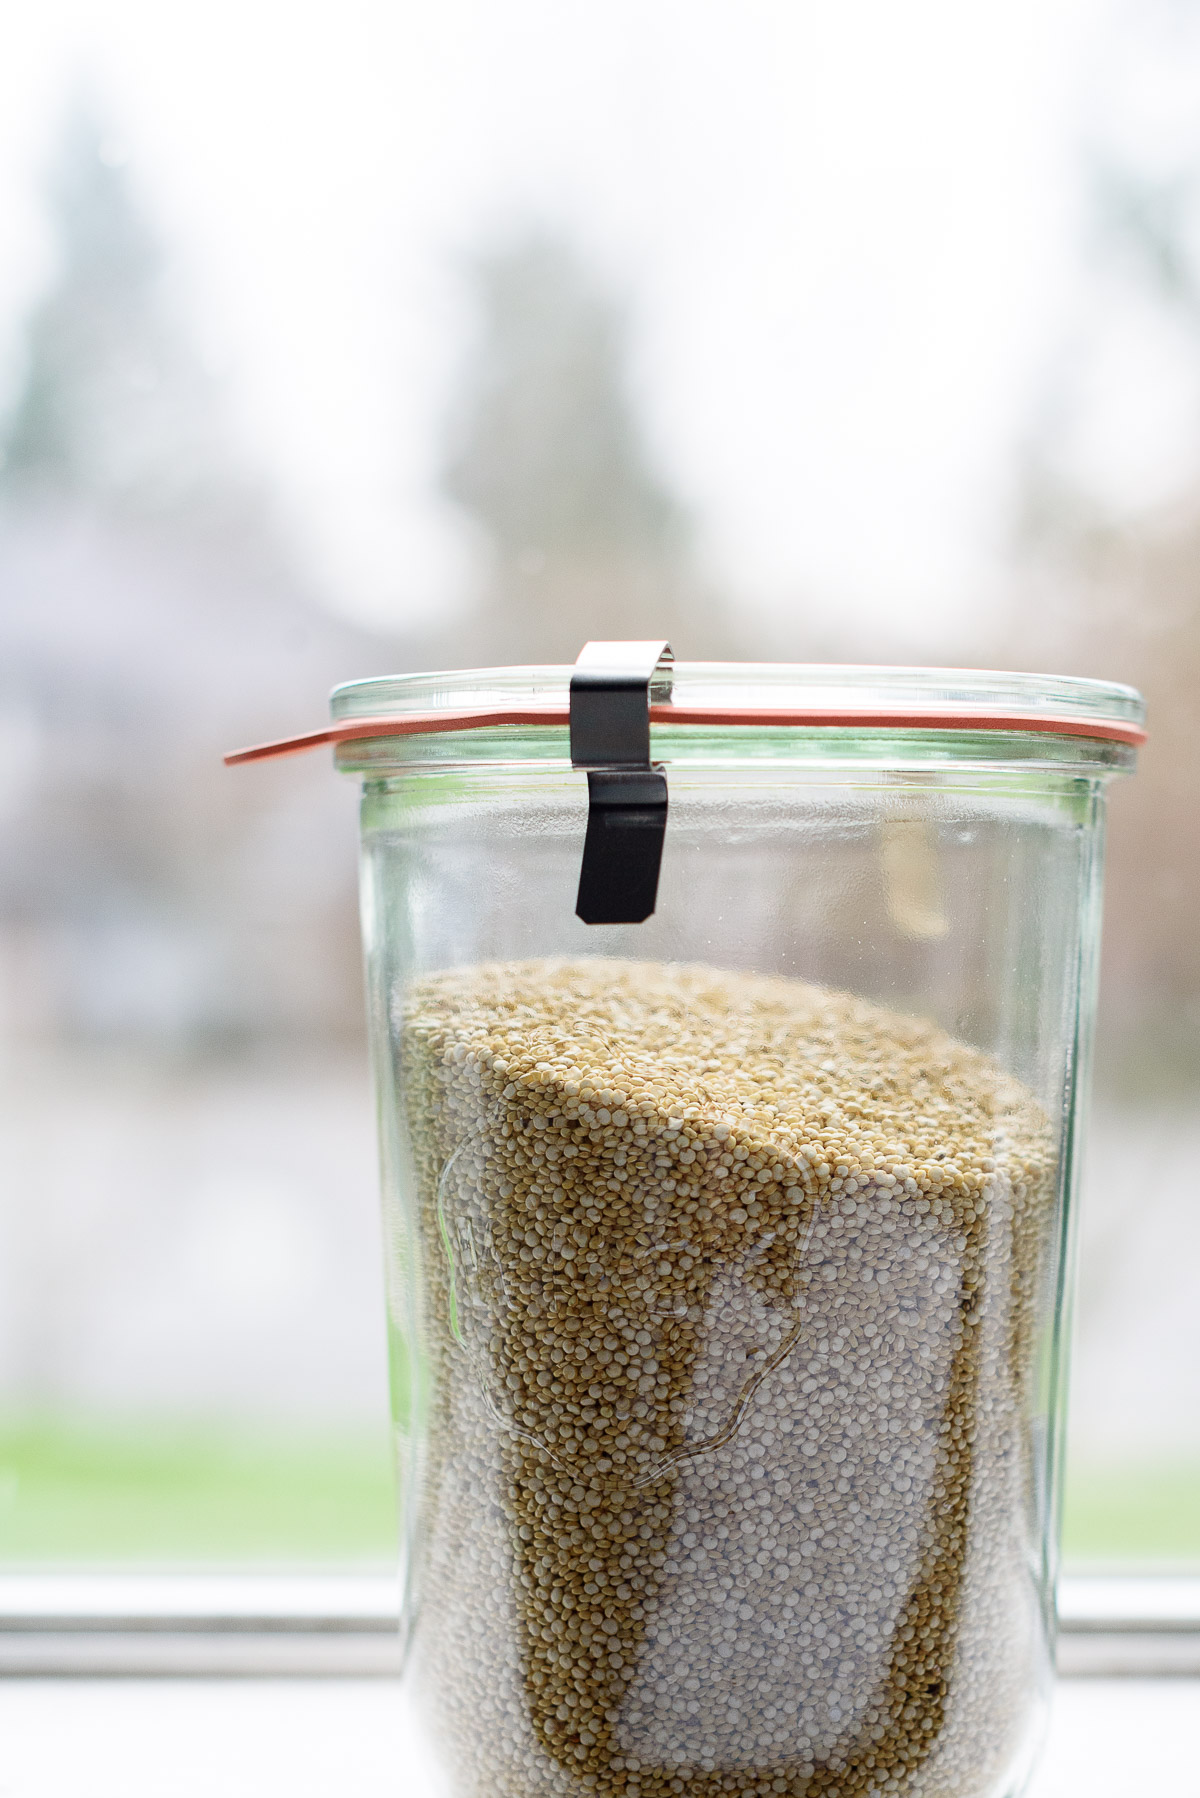 Dry quinoa in a glass Weck storage jar in overcast window light.